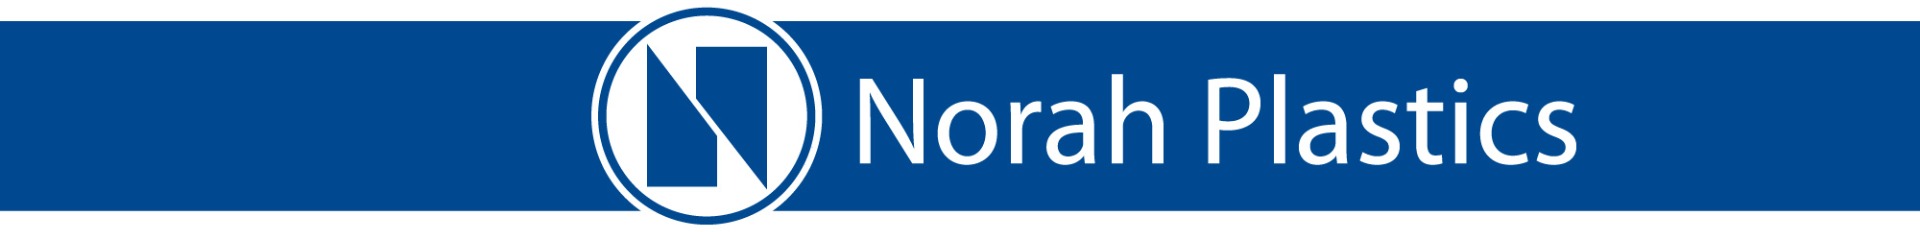 NORAH-banner-blauw_1